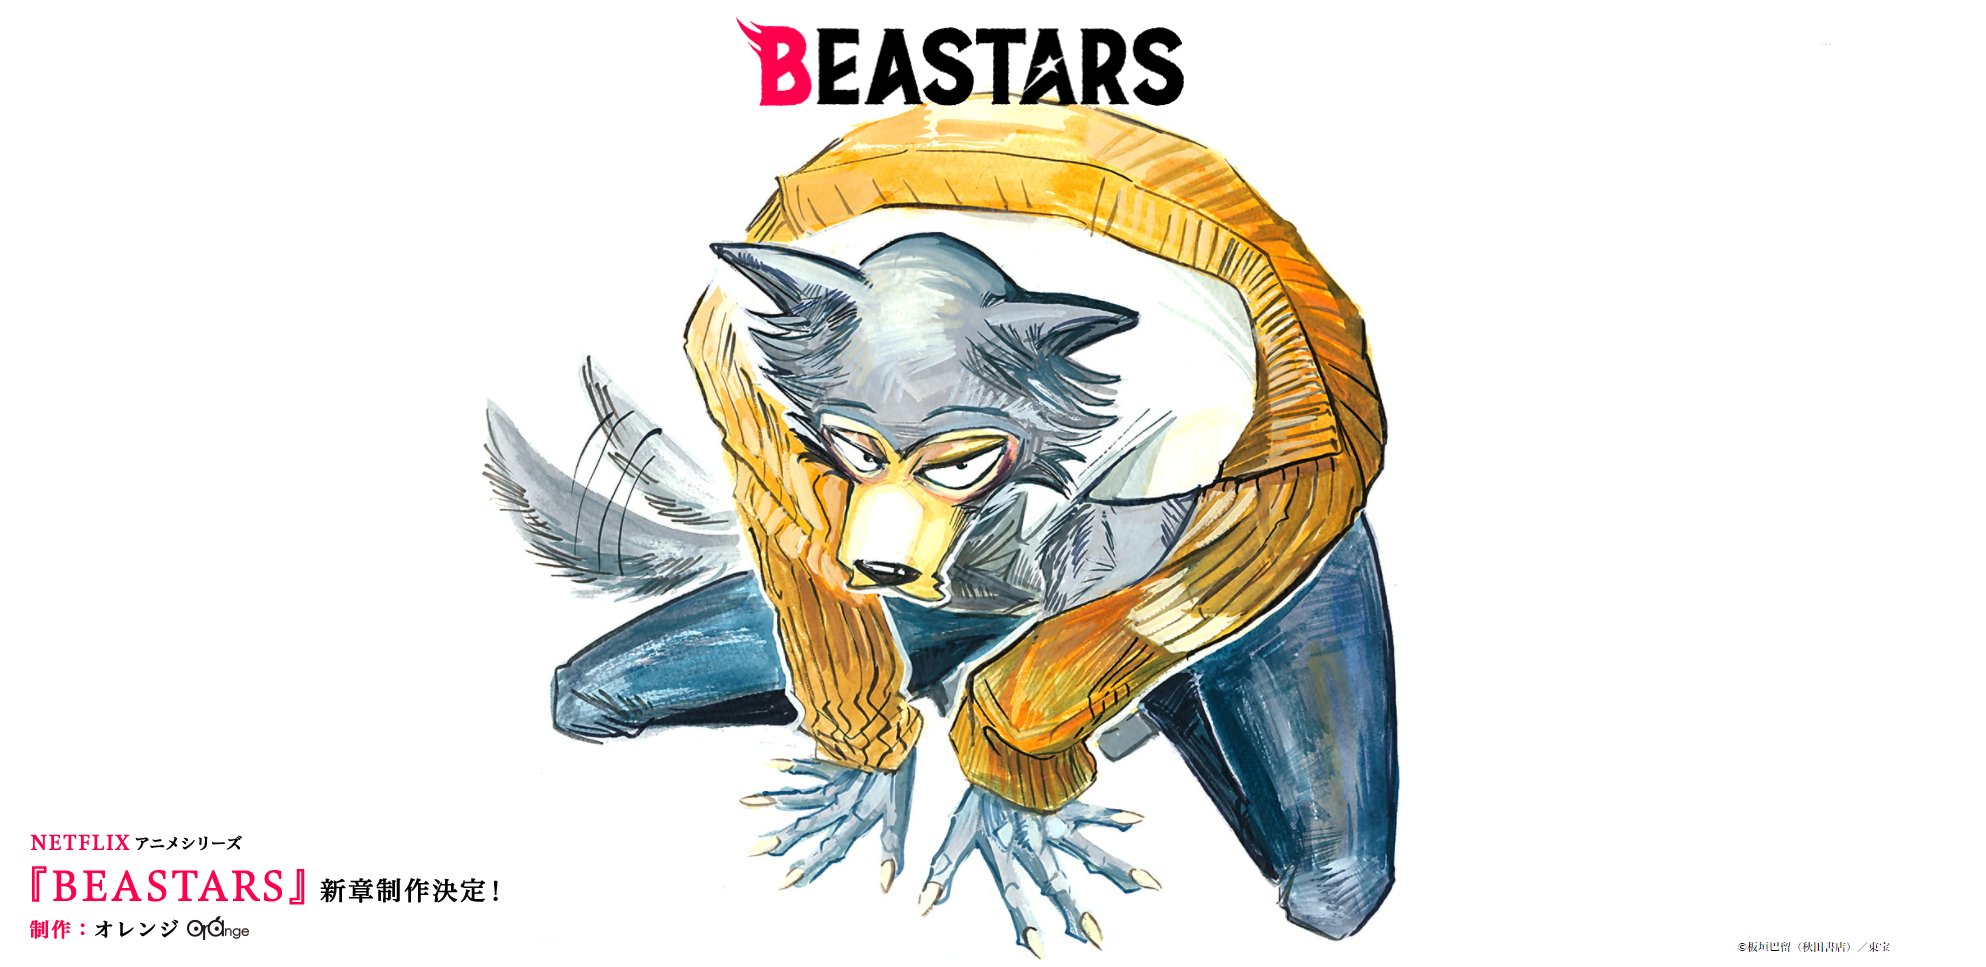 Beastars Season 3